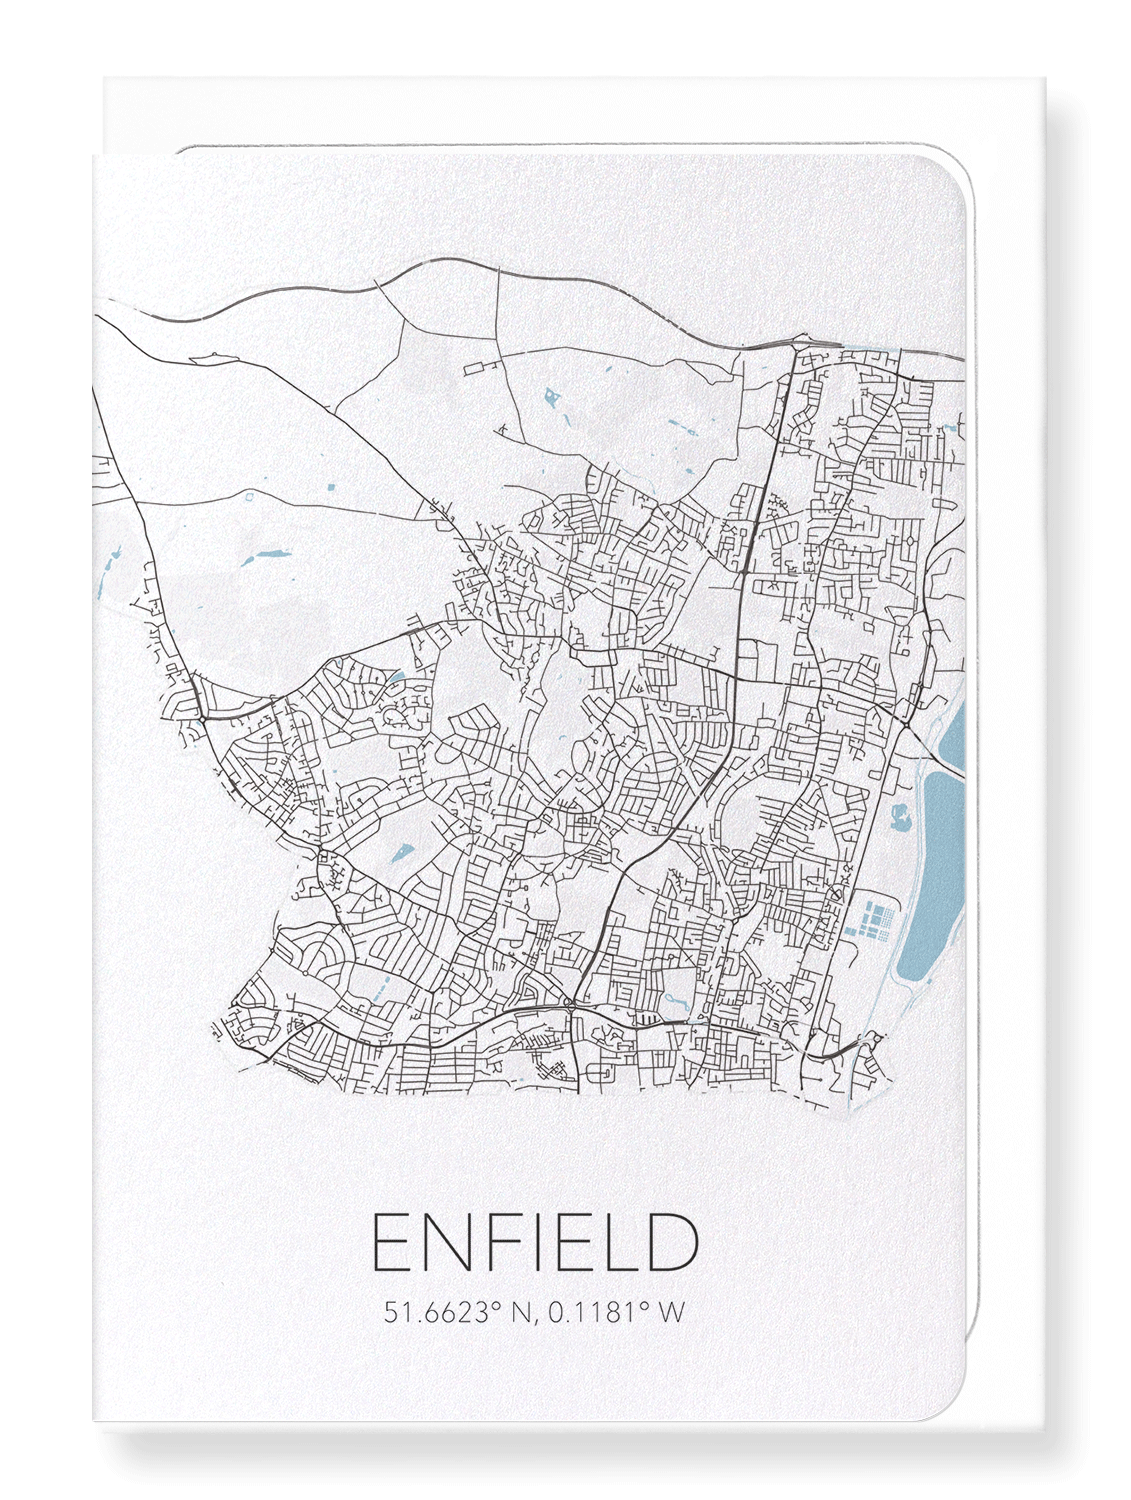 ENFIELD CUTOUT: Map Cutout Greeting Card